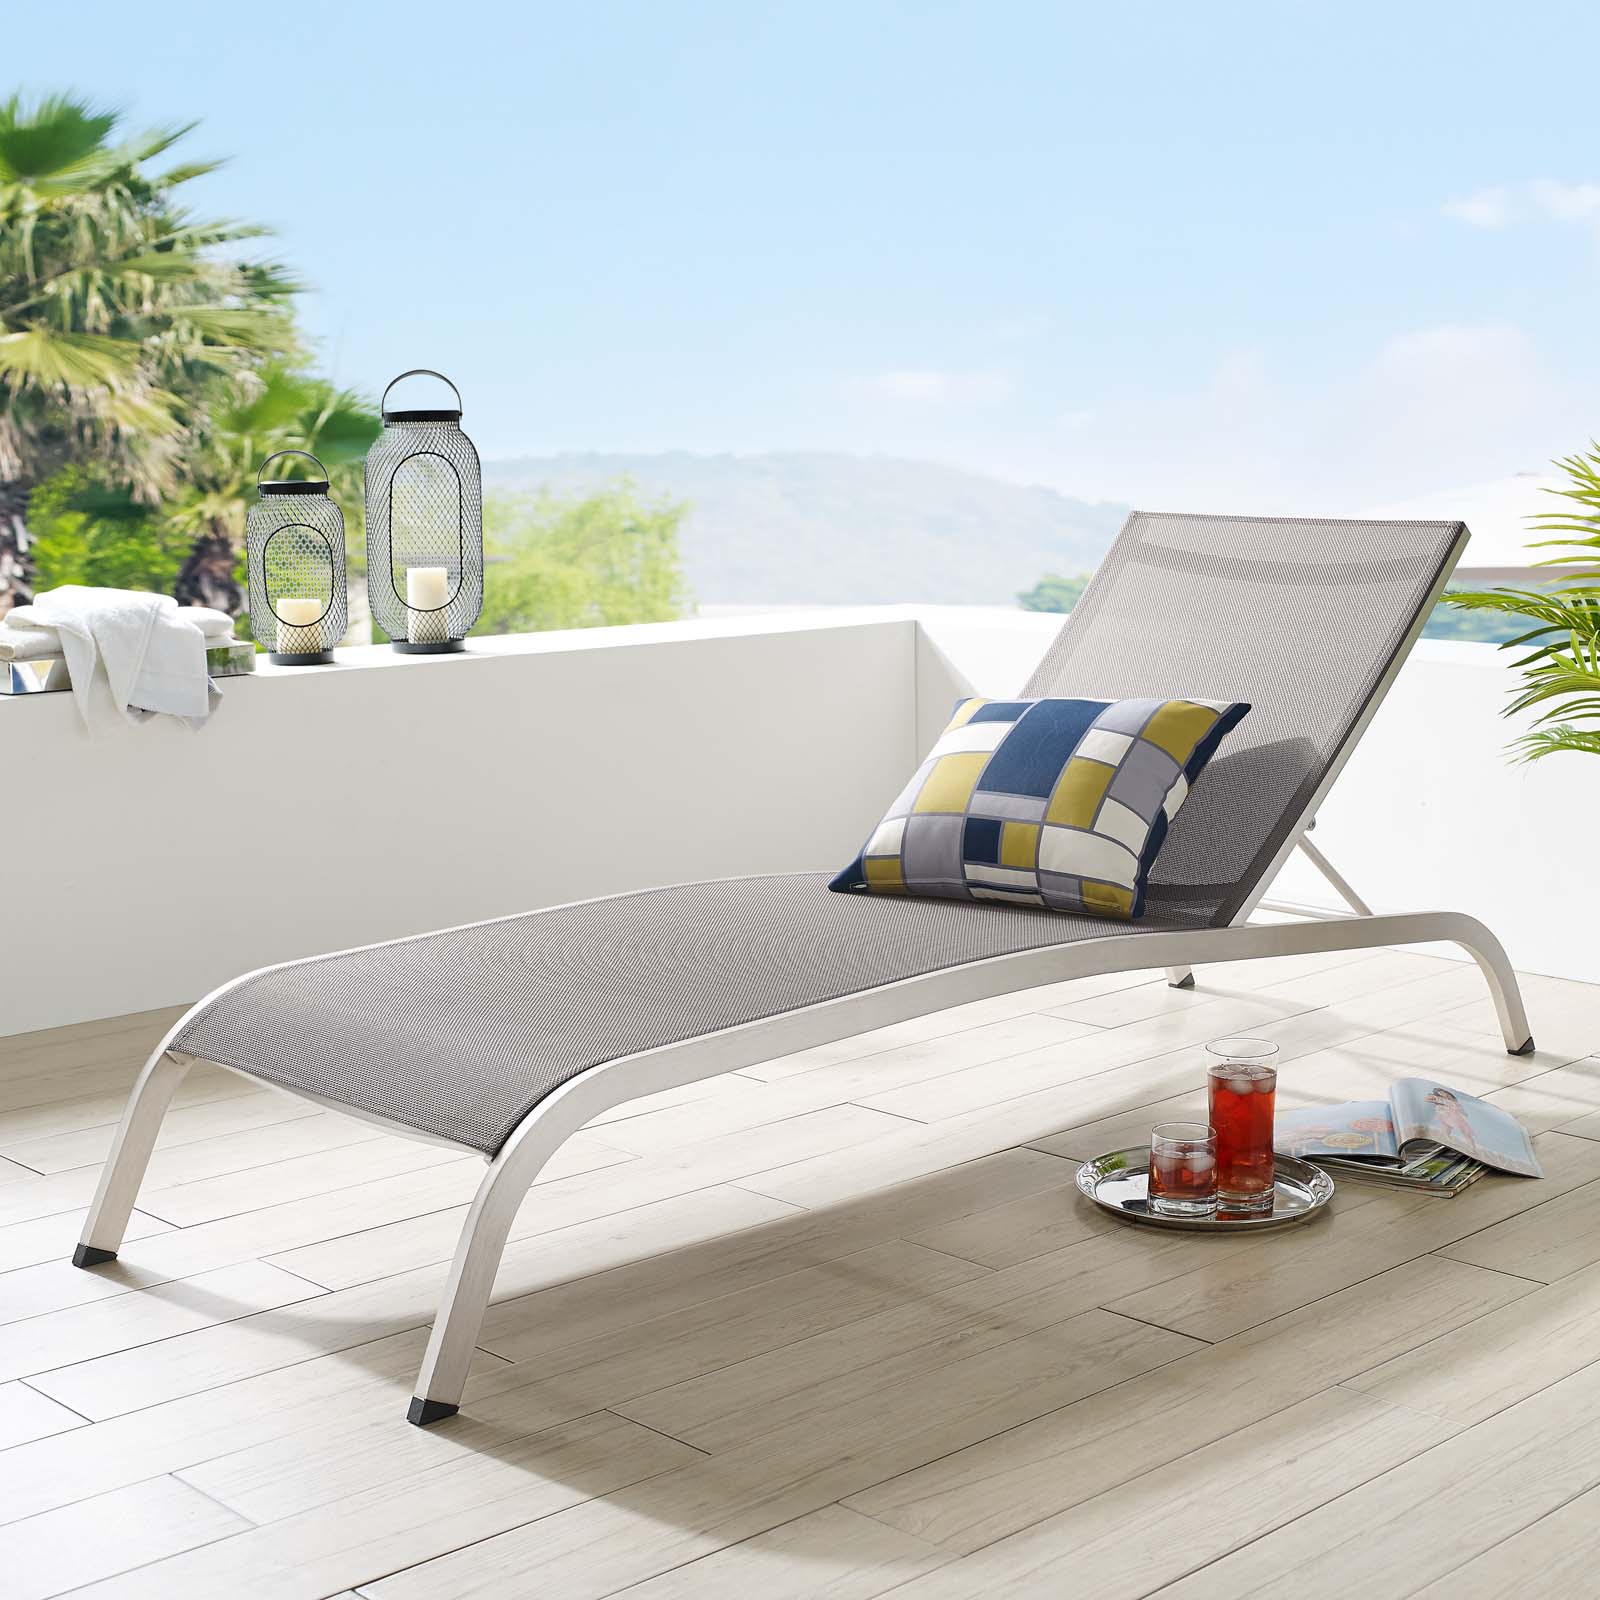 Contemporary Modern Urban Designer Outdoor Patio Balcony Garden Furniture Lounge Lounge Chair, Aluminum, Grey Gray - image 3 of 7